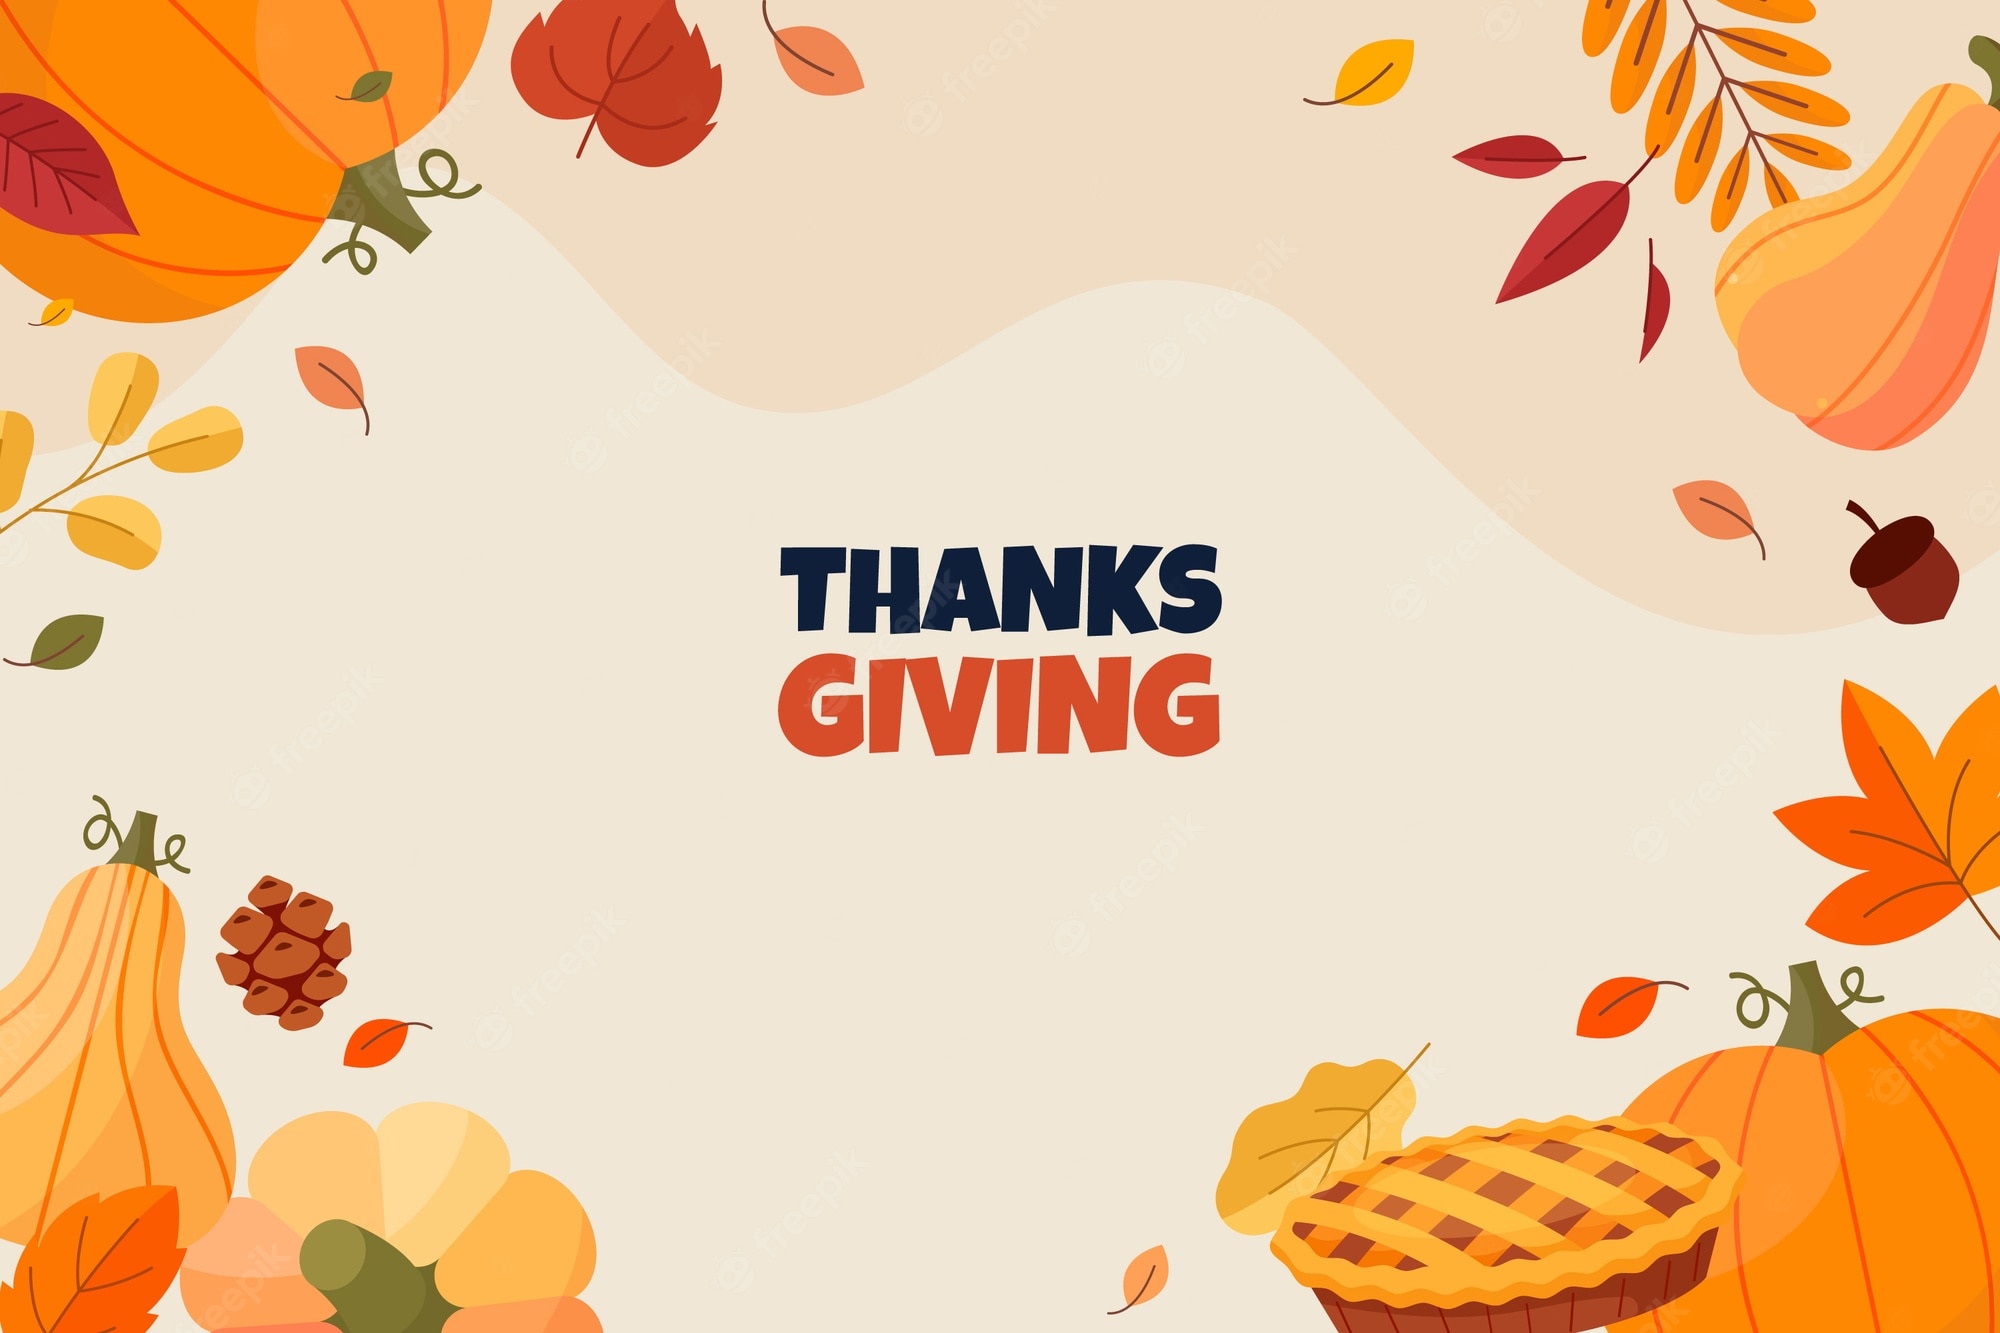 Thanksgiving wallpaper Image. Free Vectors, & PSD